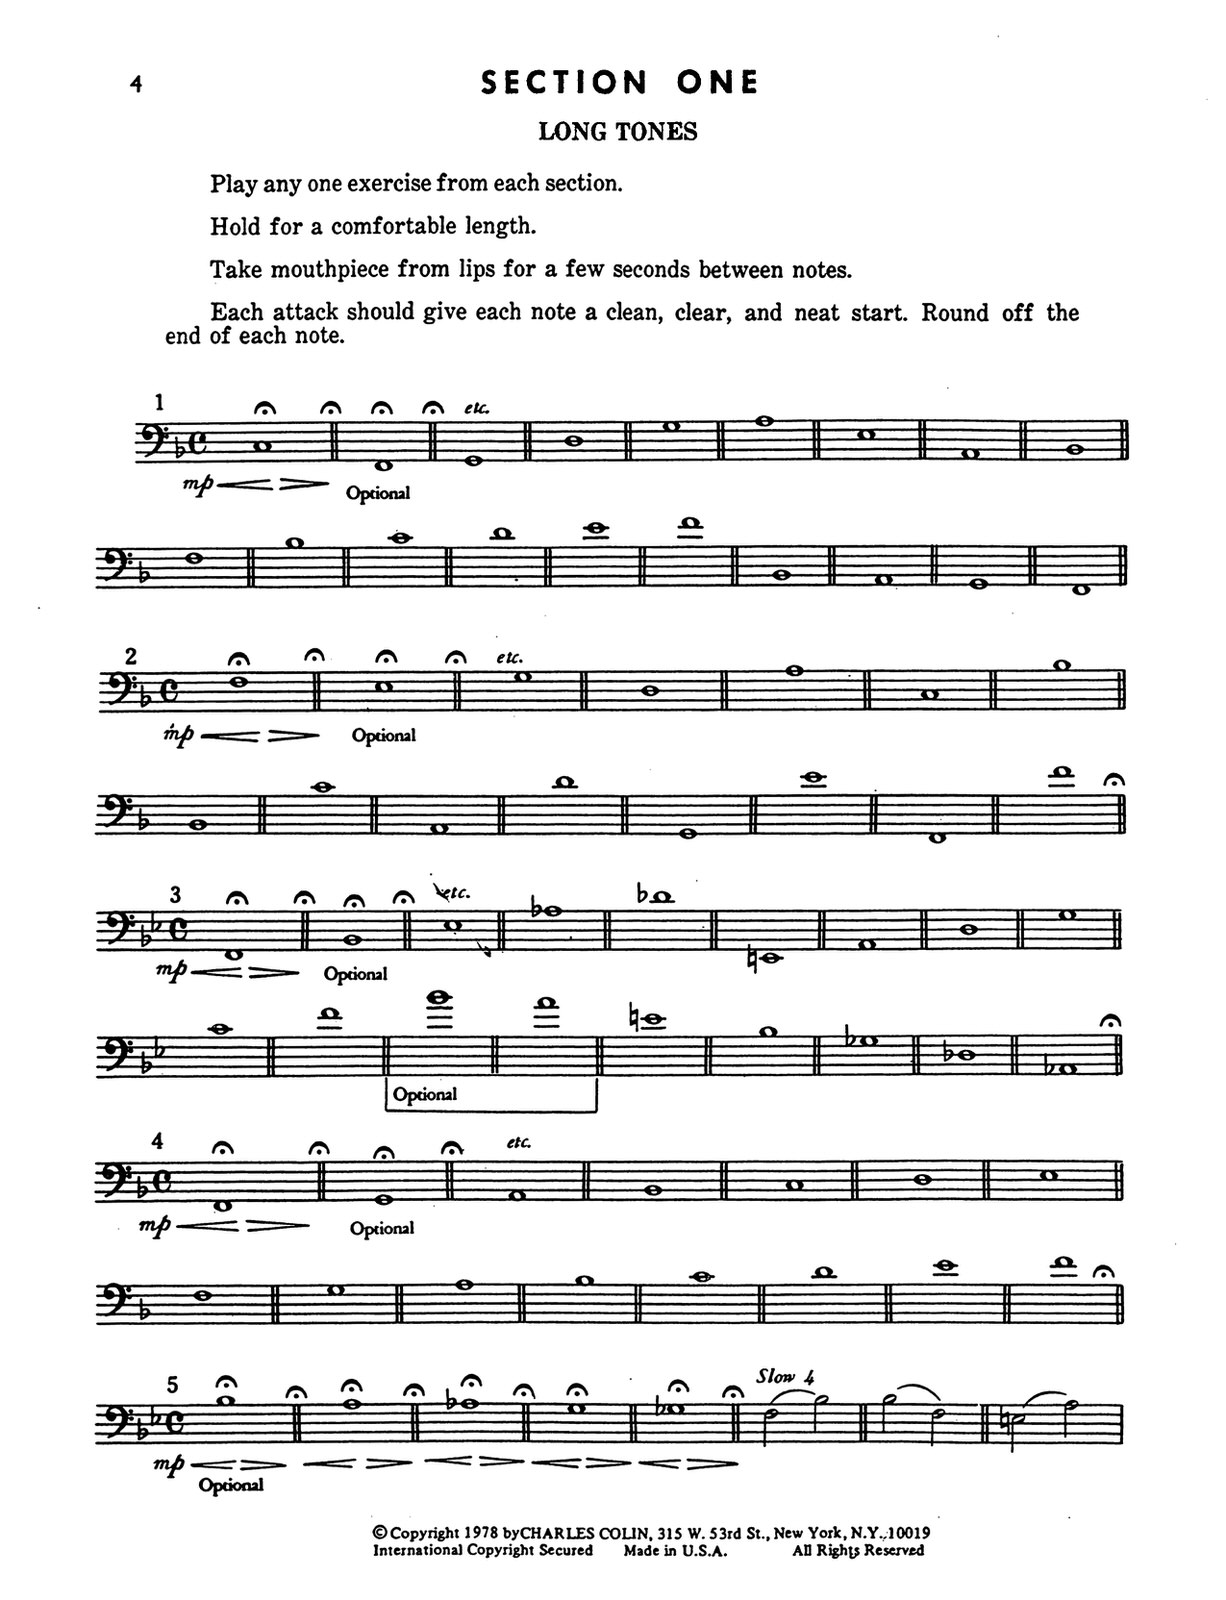 20 minute warm-up routine for tuba pdf